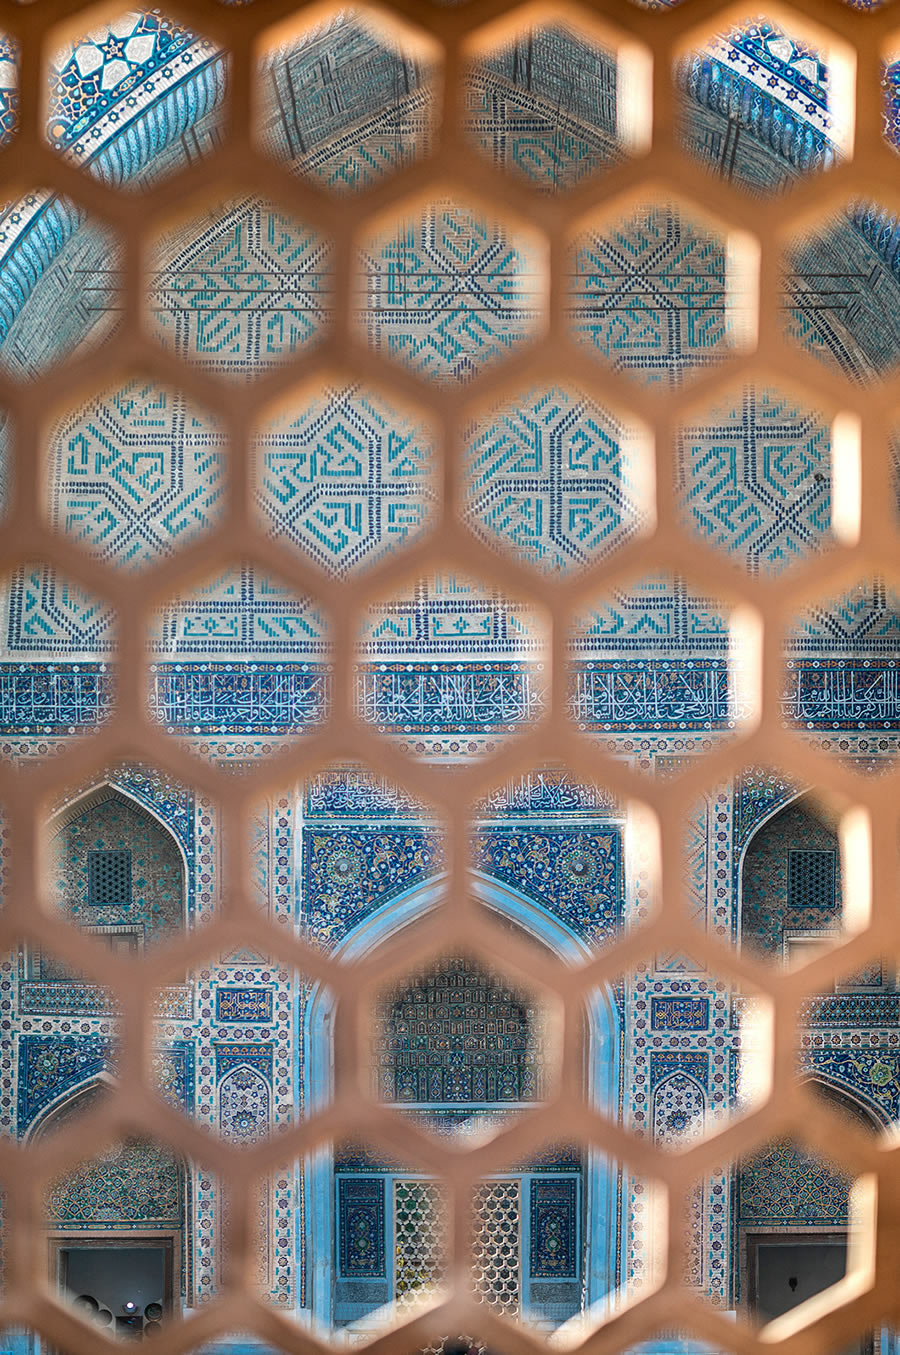 Beautiful Photos Of Samarkand, Uzbekistanm By Dimitar Karanikolov